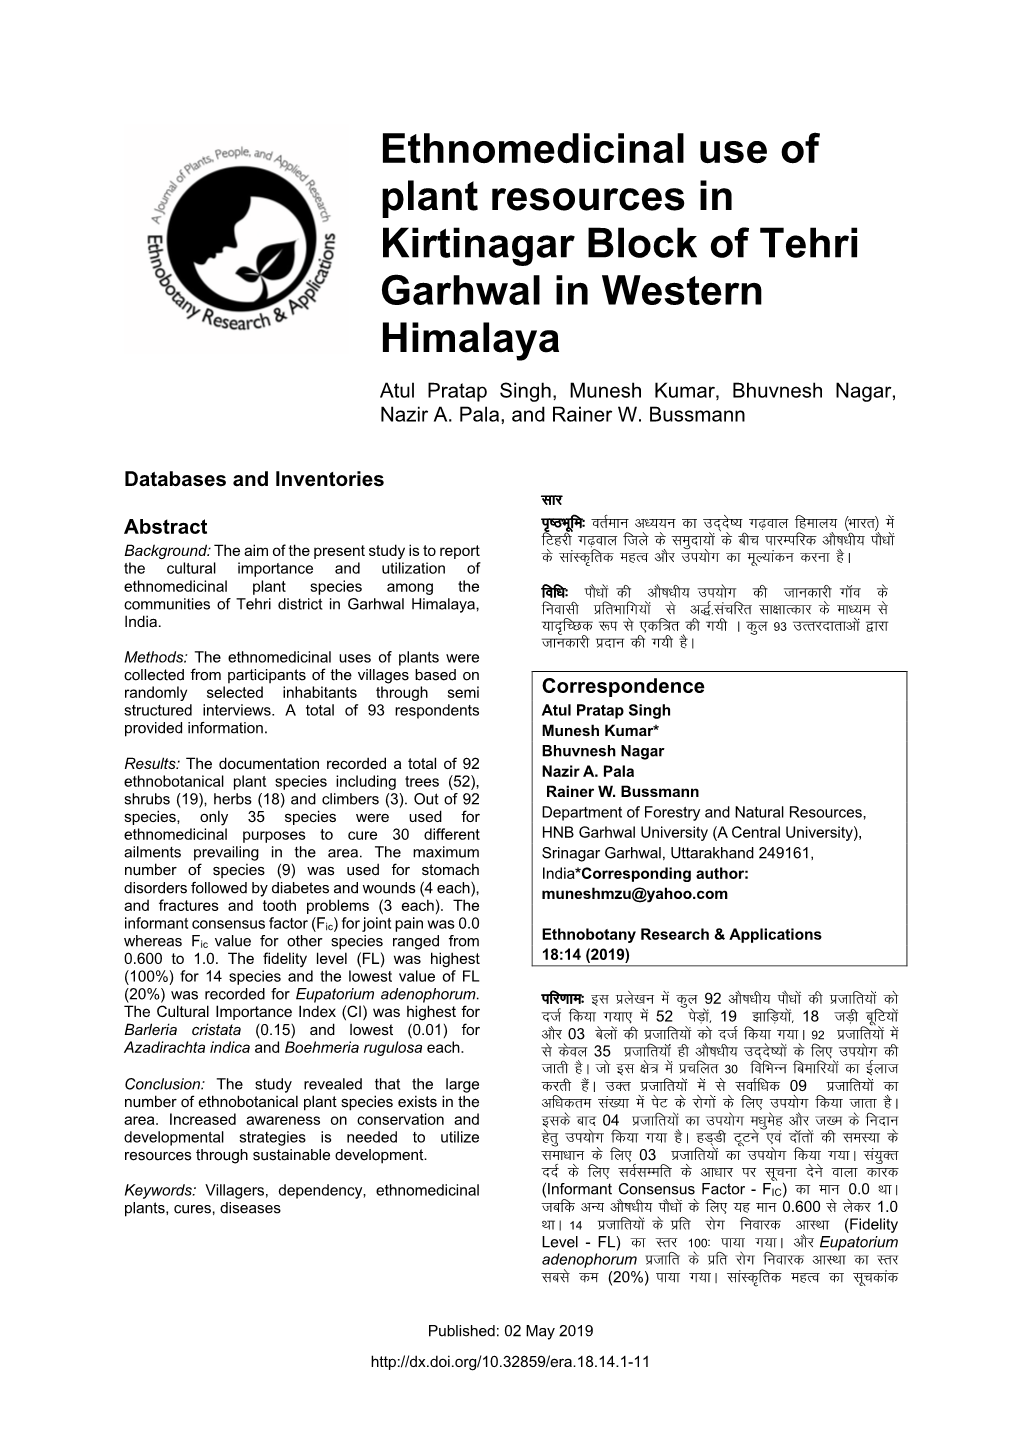 Ethnomedicinal Use of Plant Resources in Kirtinagar Block of Tehri Garhwal in Western